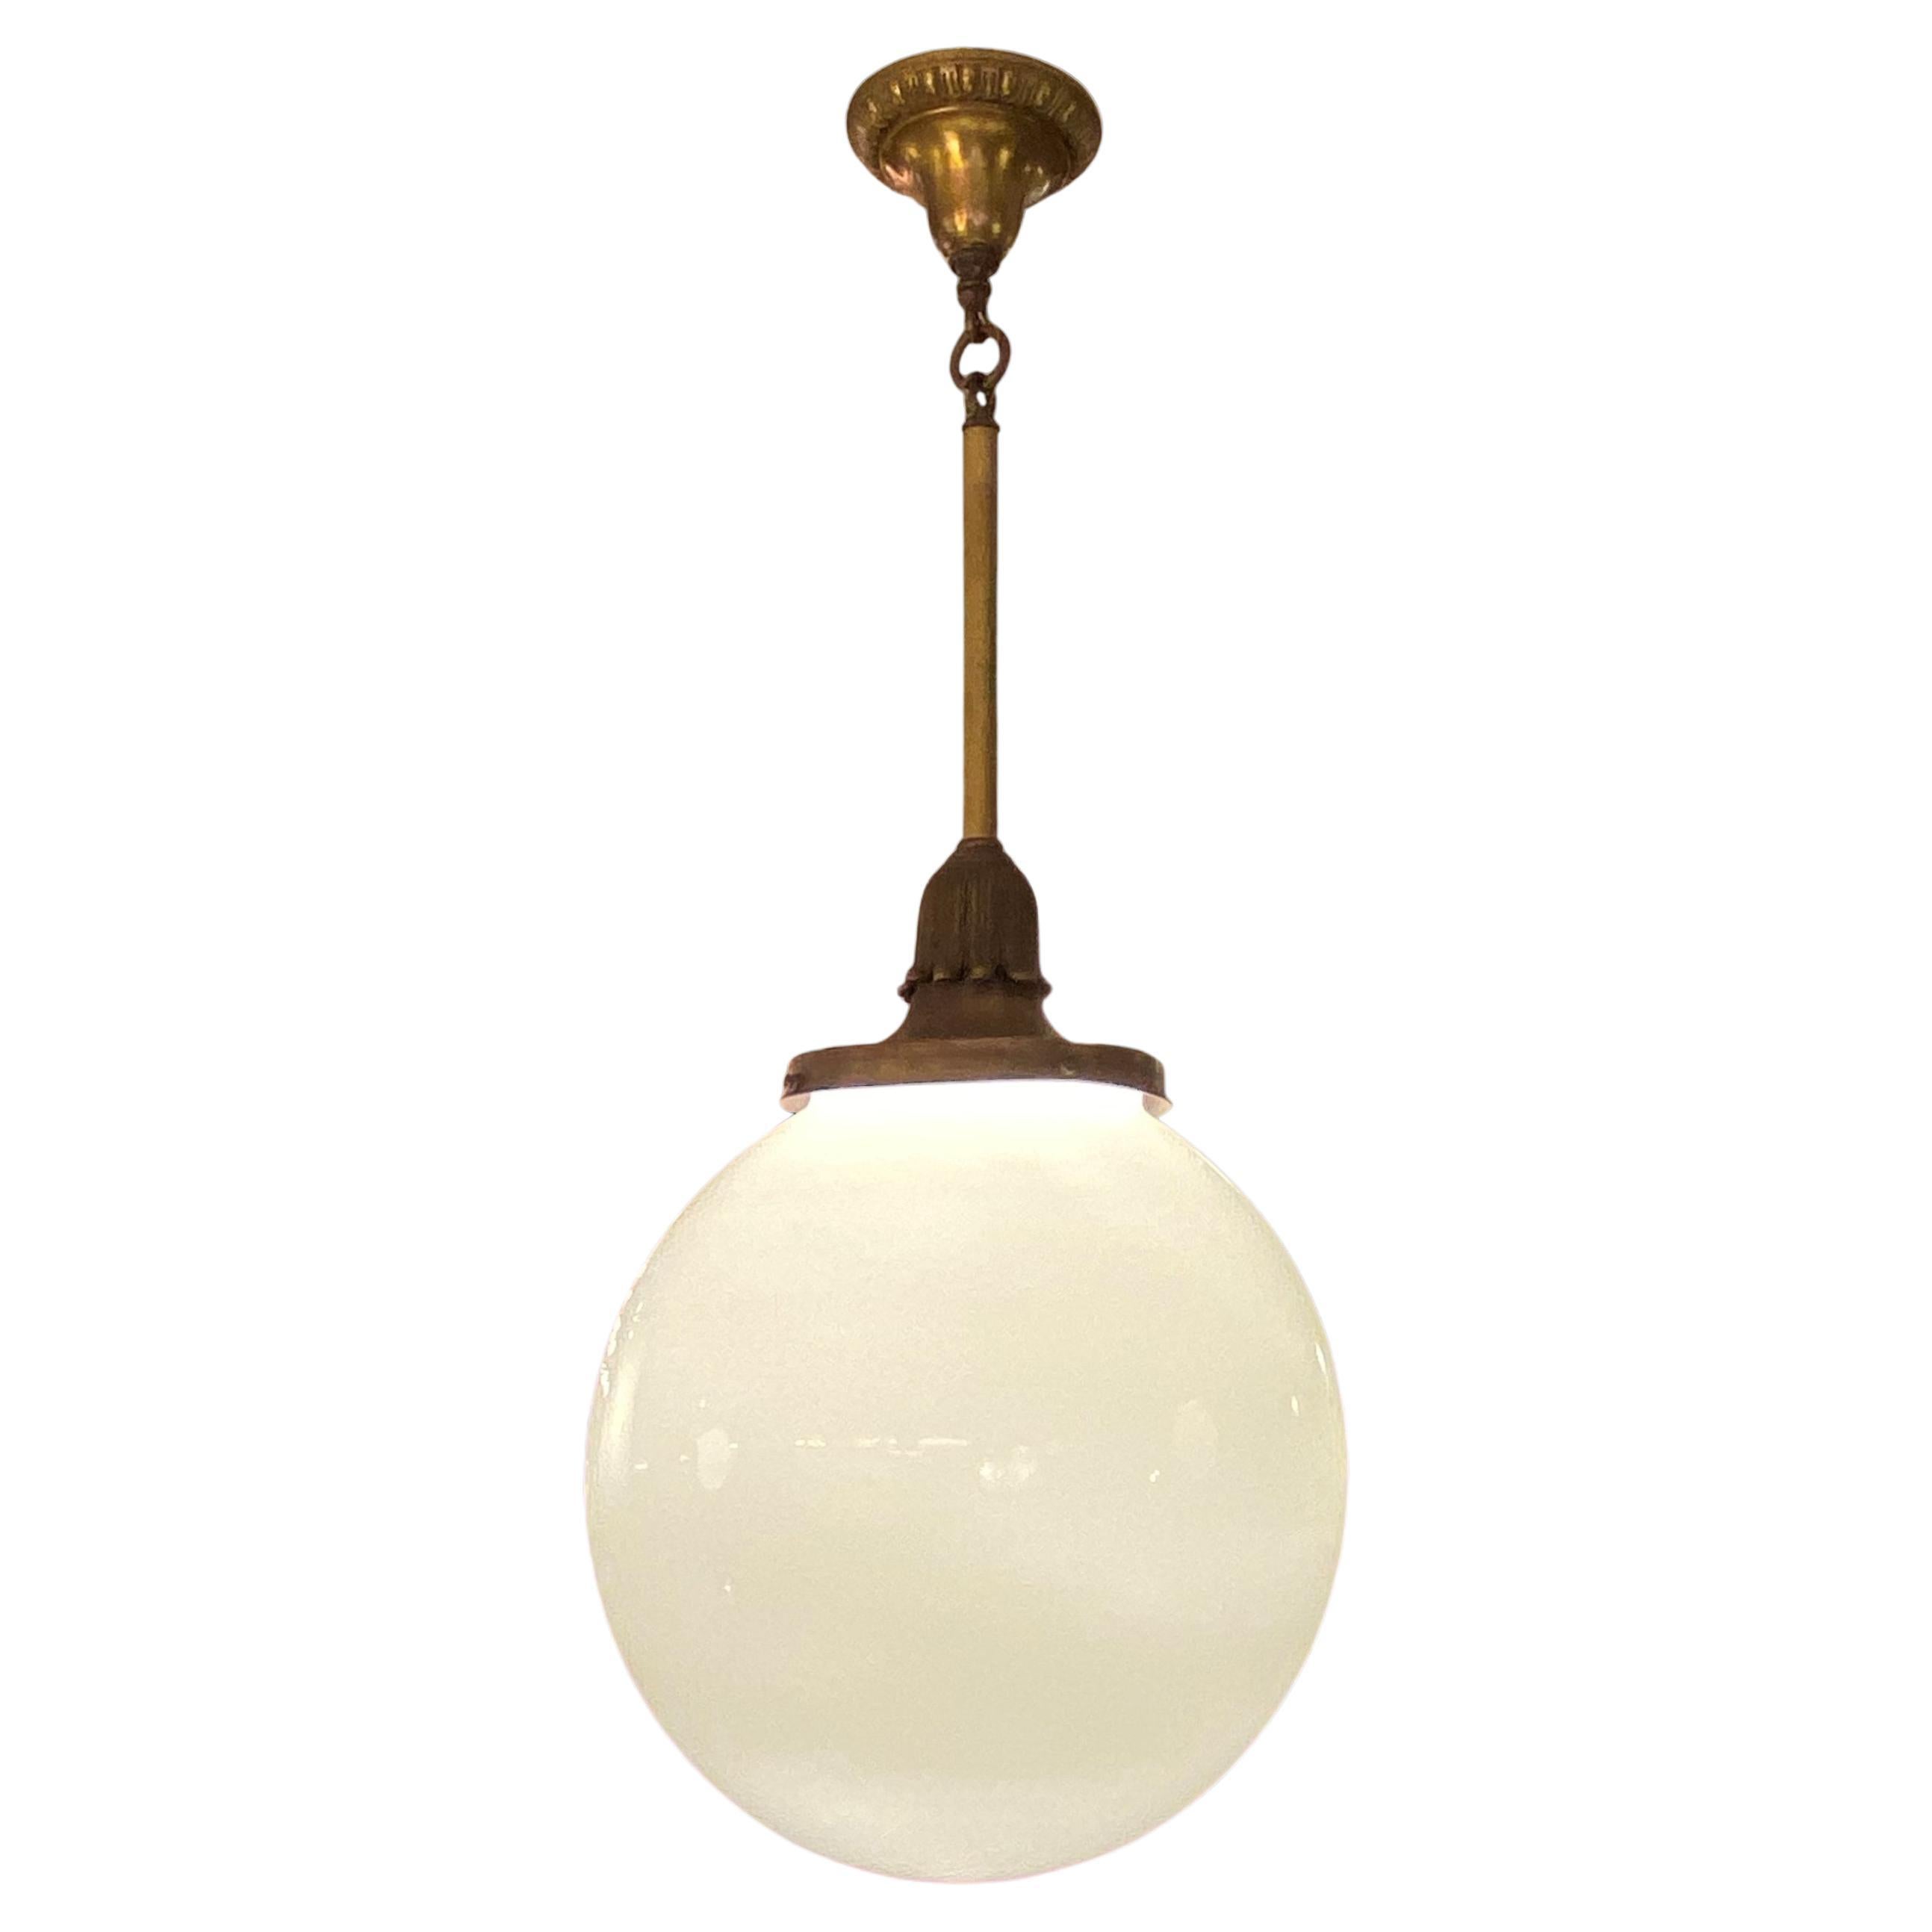 Opaline Ball Globe Ornate Brass & Bronze Pendant Light